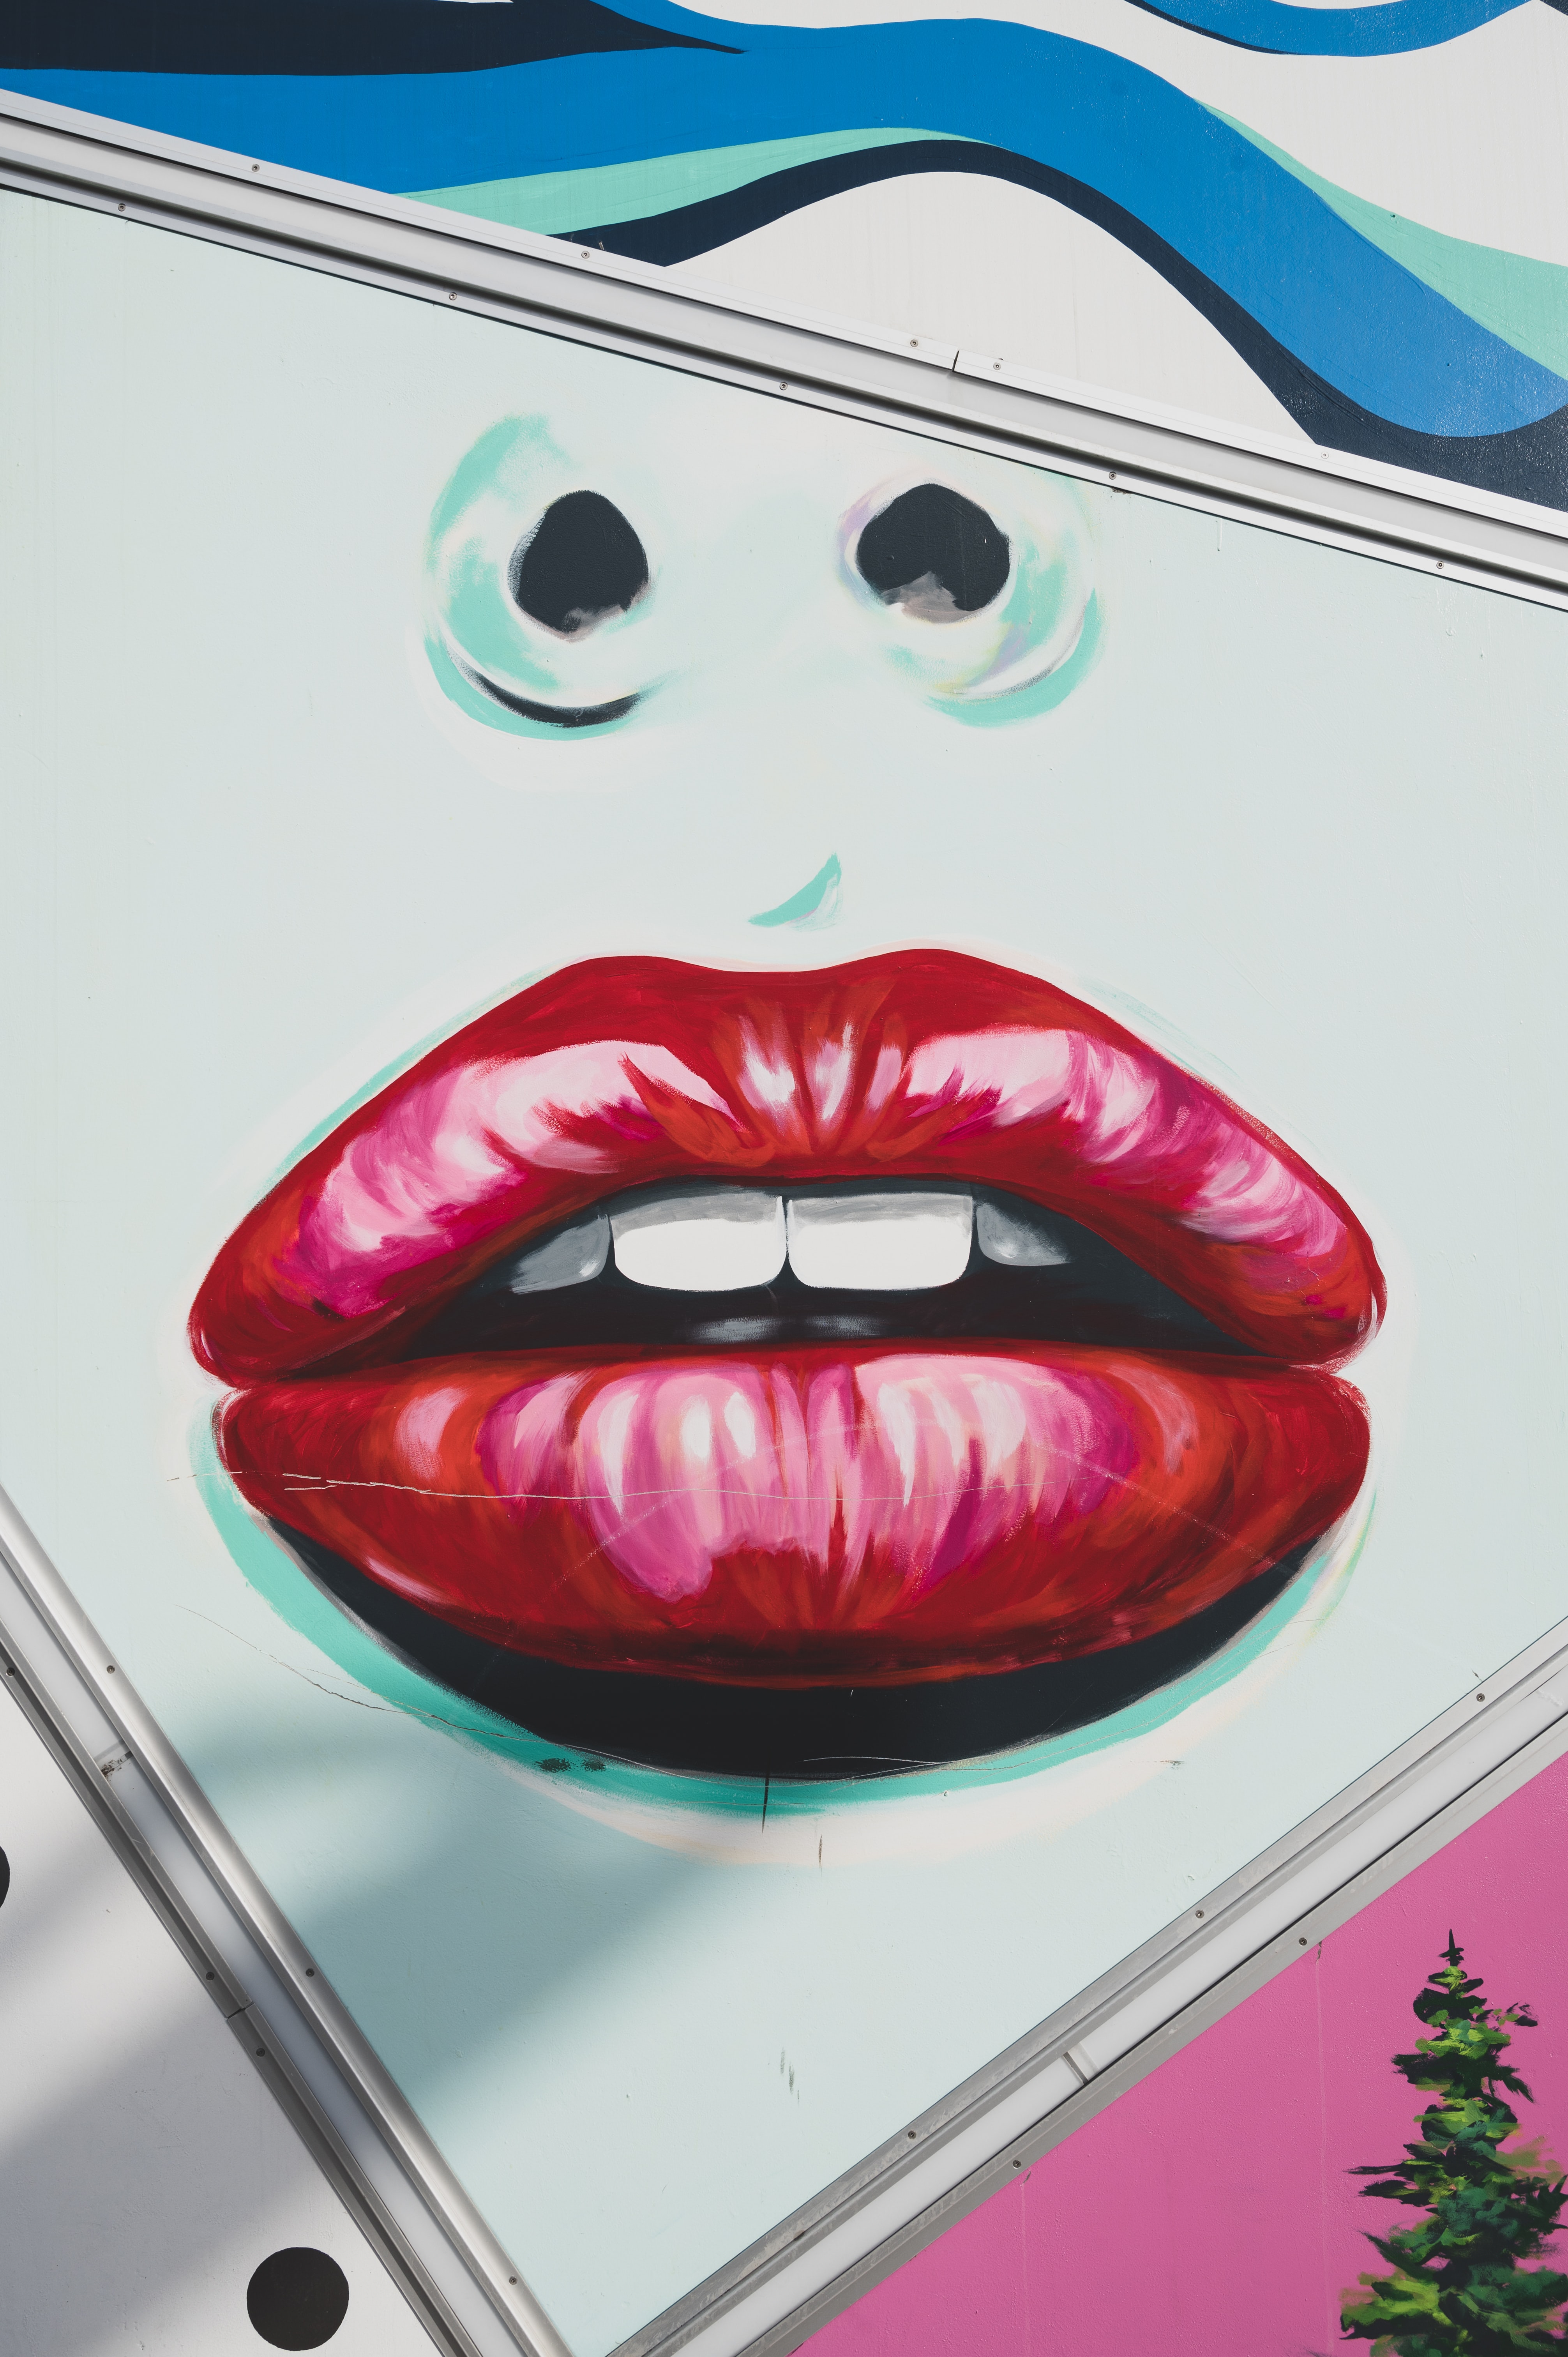 graffiti, art, wall, nose, lips, mural